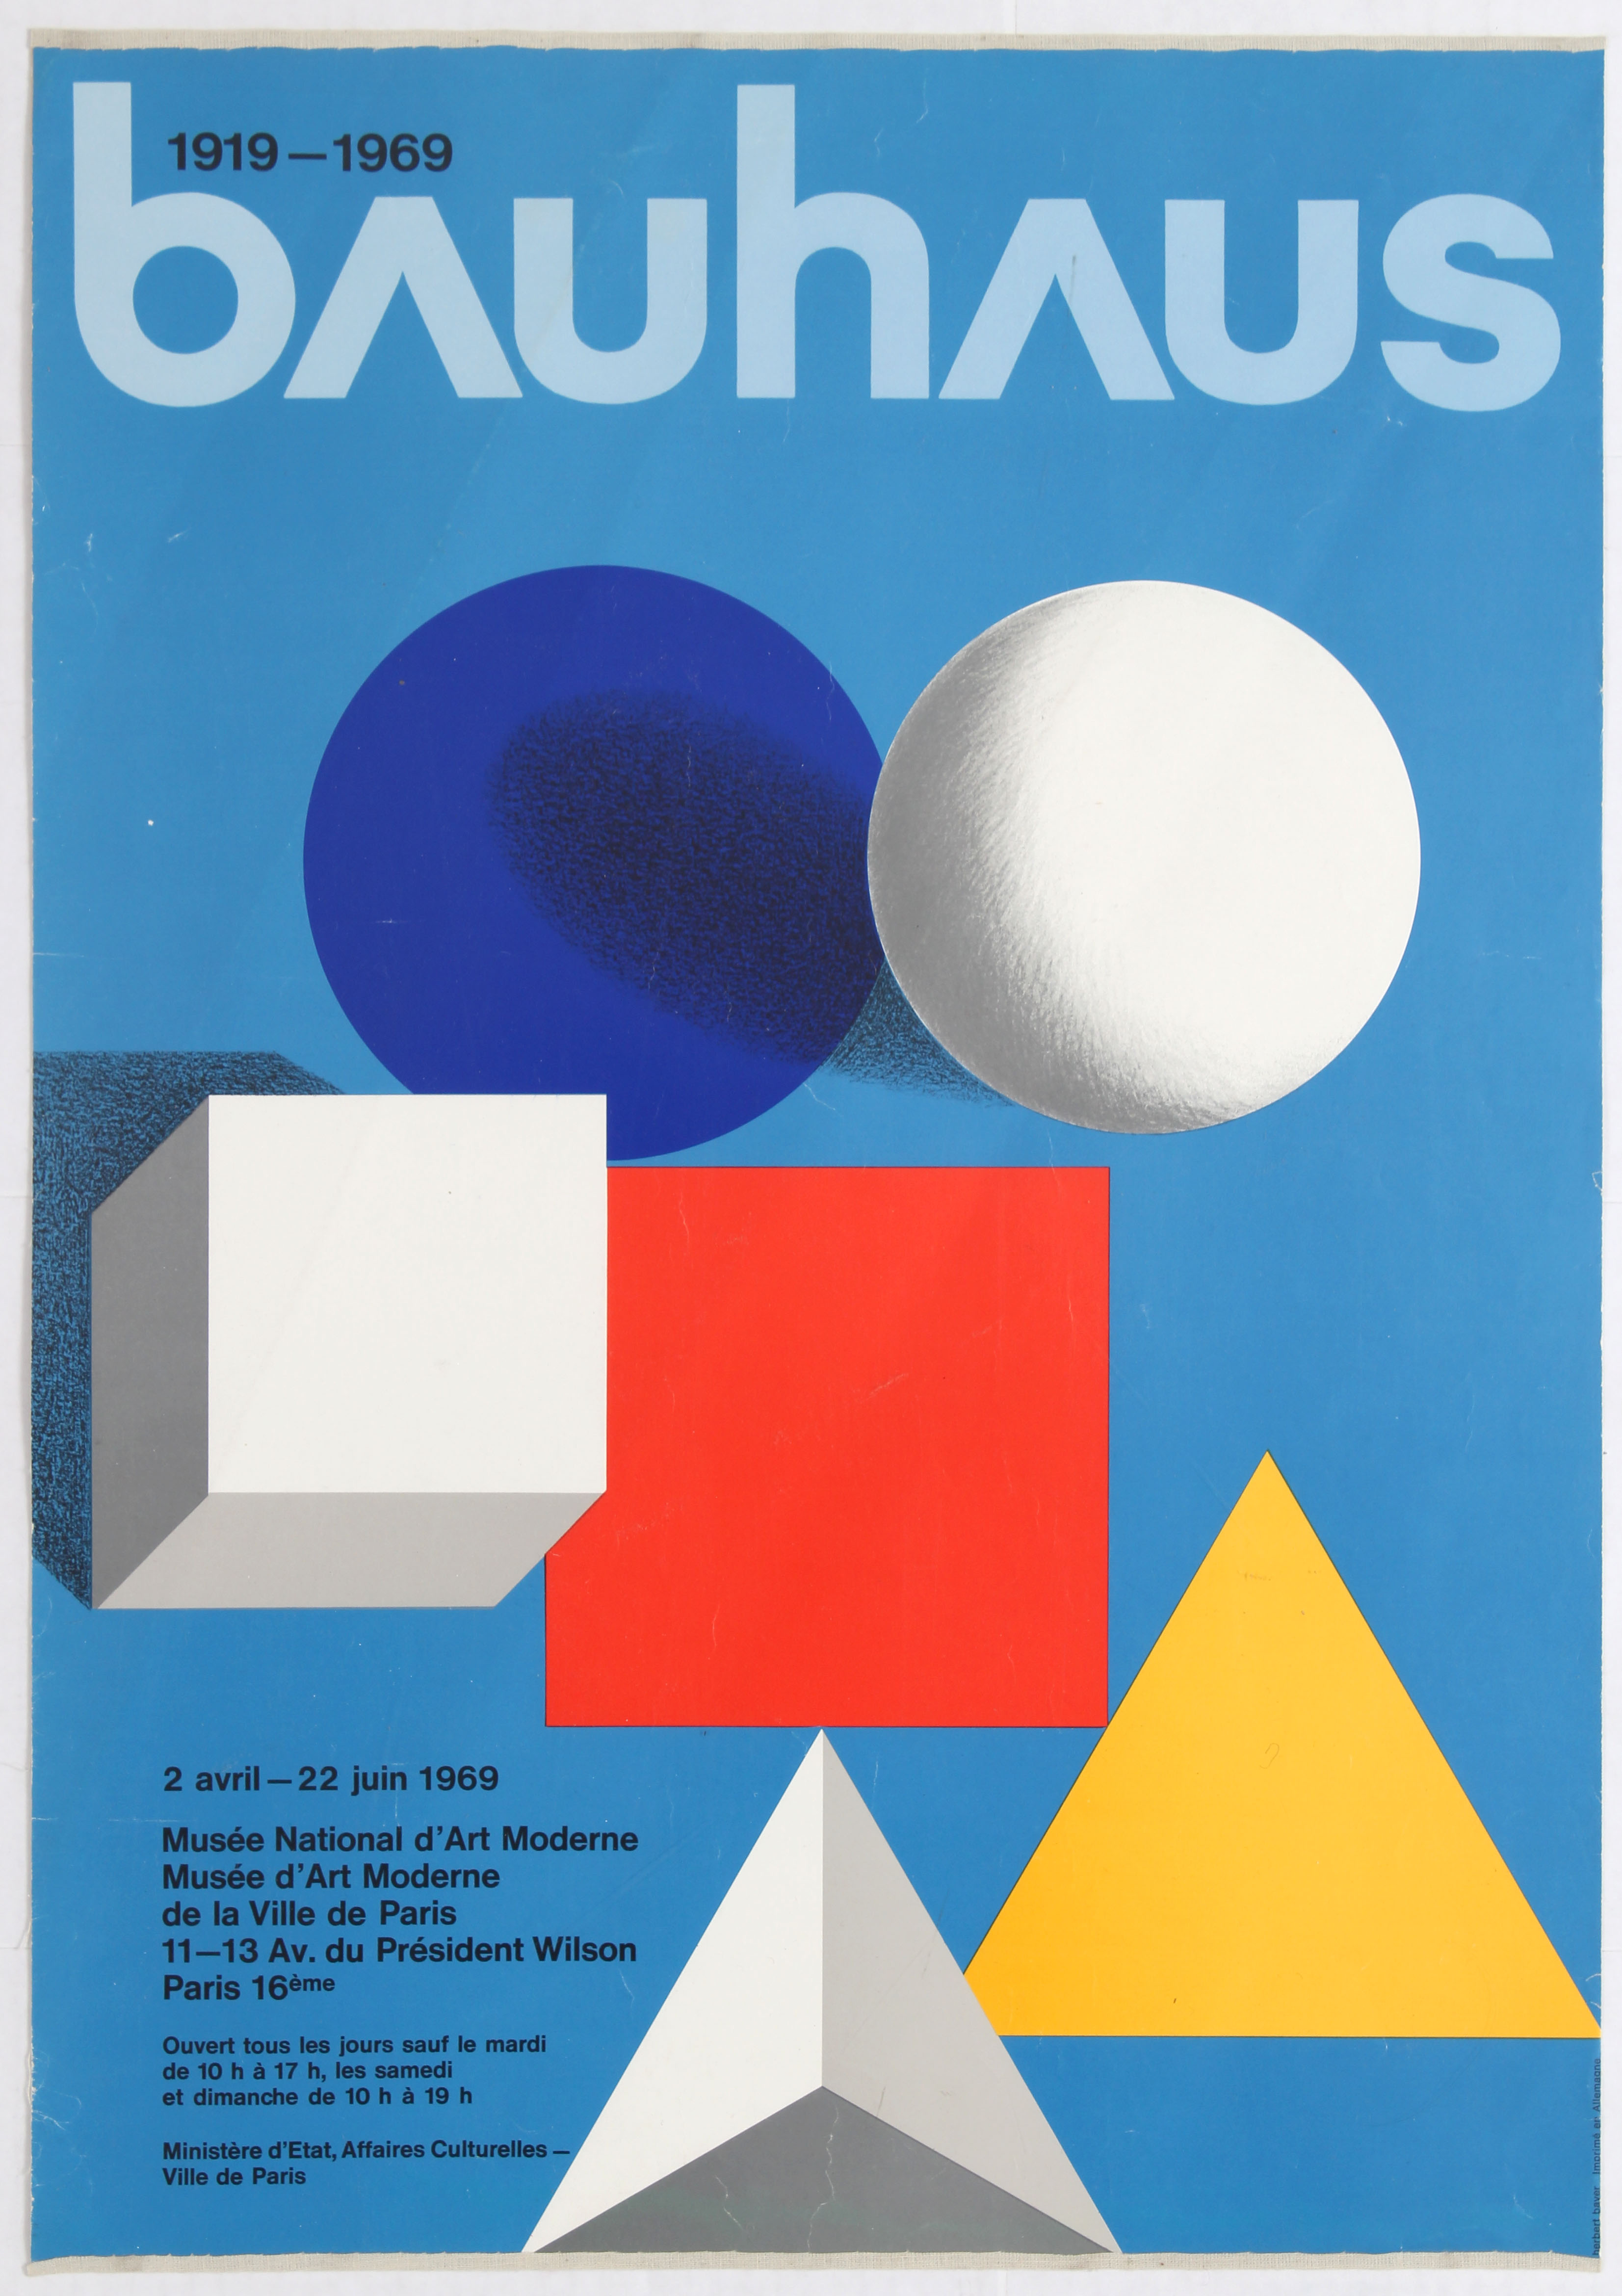 Exhibition Advertising Poster 50 years of Bauhaus